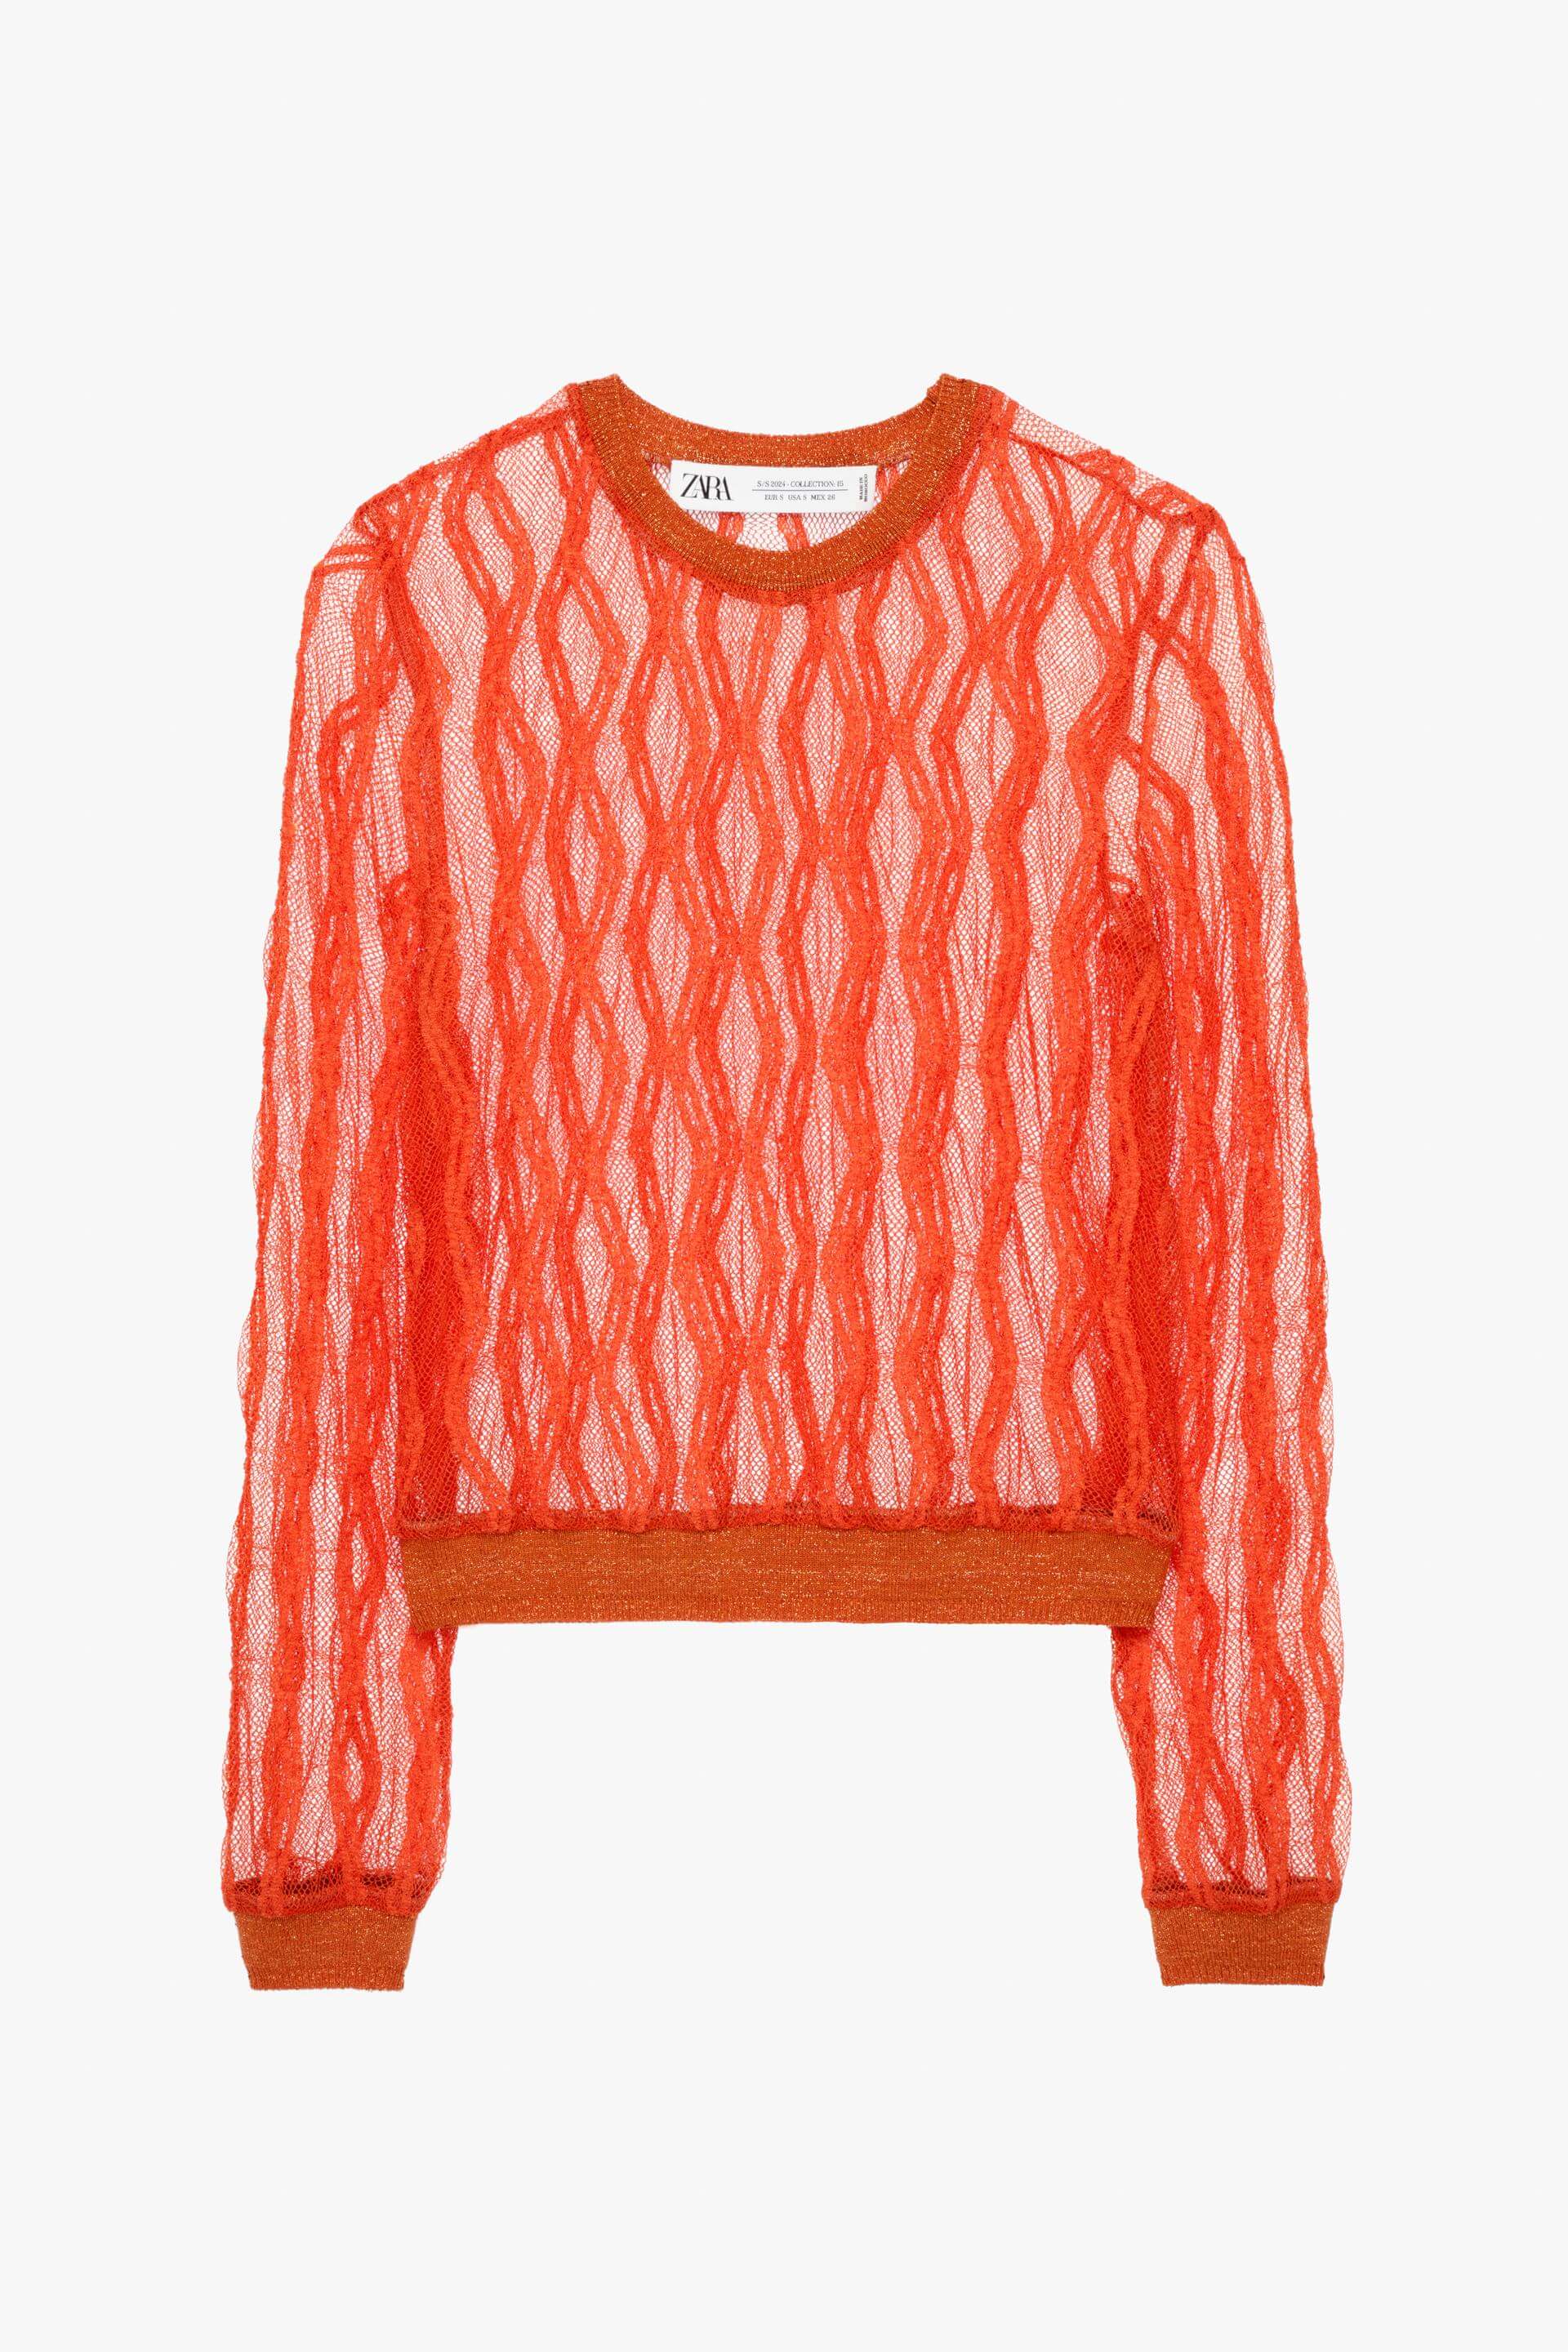 Топ Zara Knit - Limited Edition, оранжевый футболка zara embroidery limited edition белый